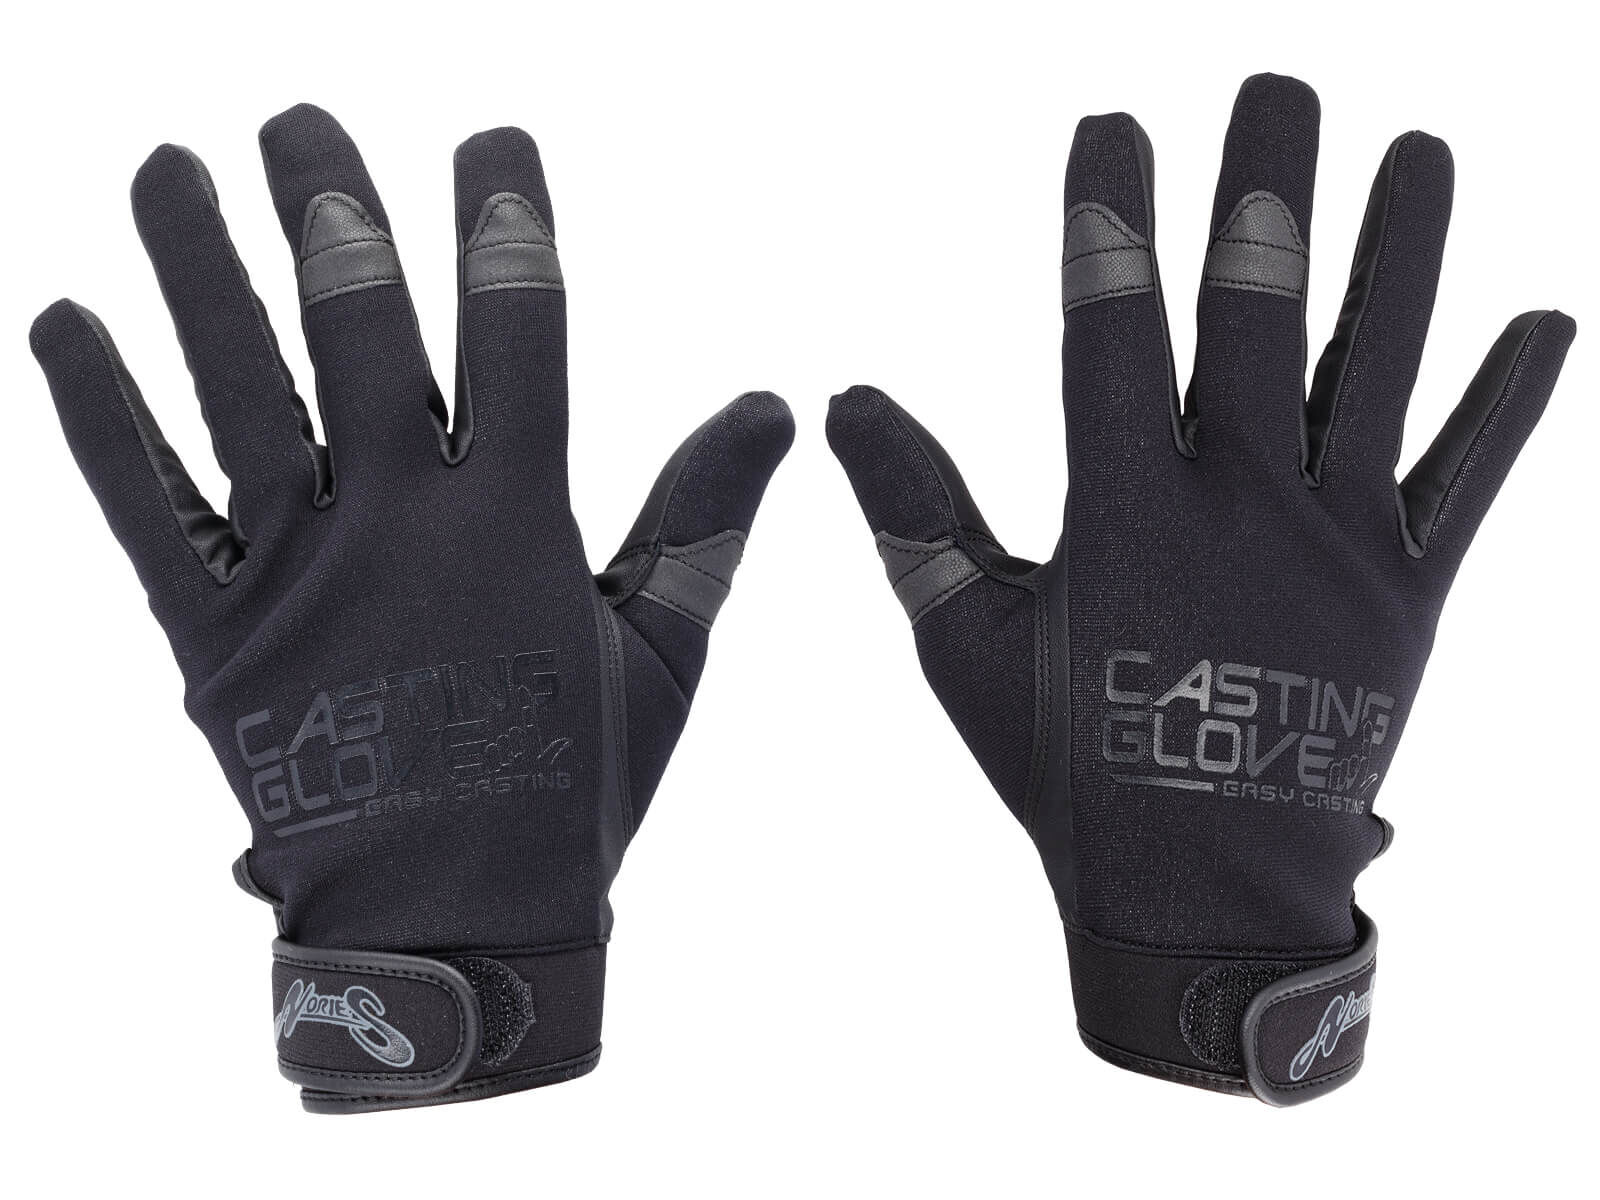 NORIES Casting Gloves NS-03 Black Size M